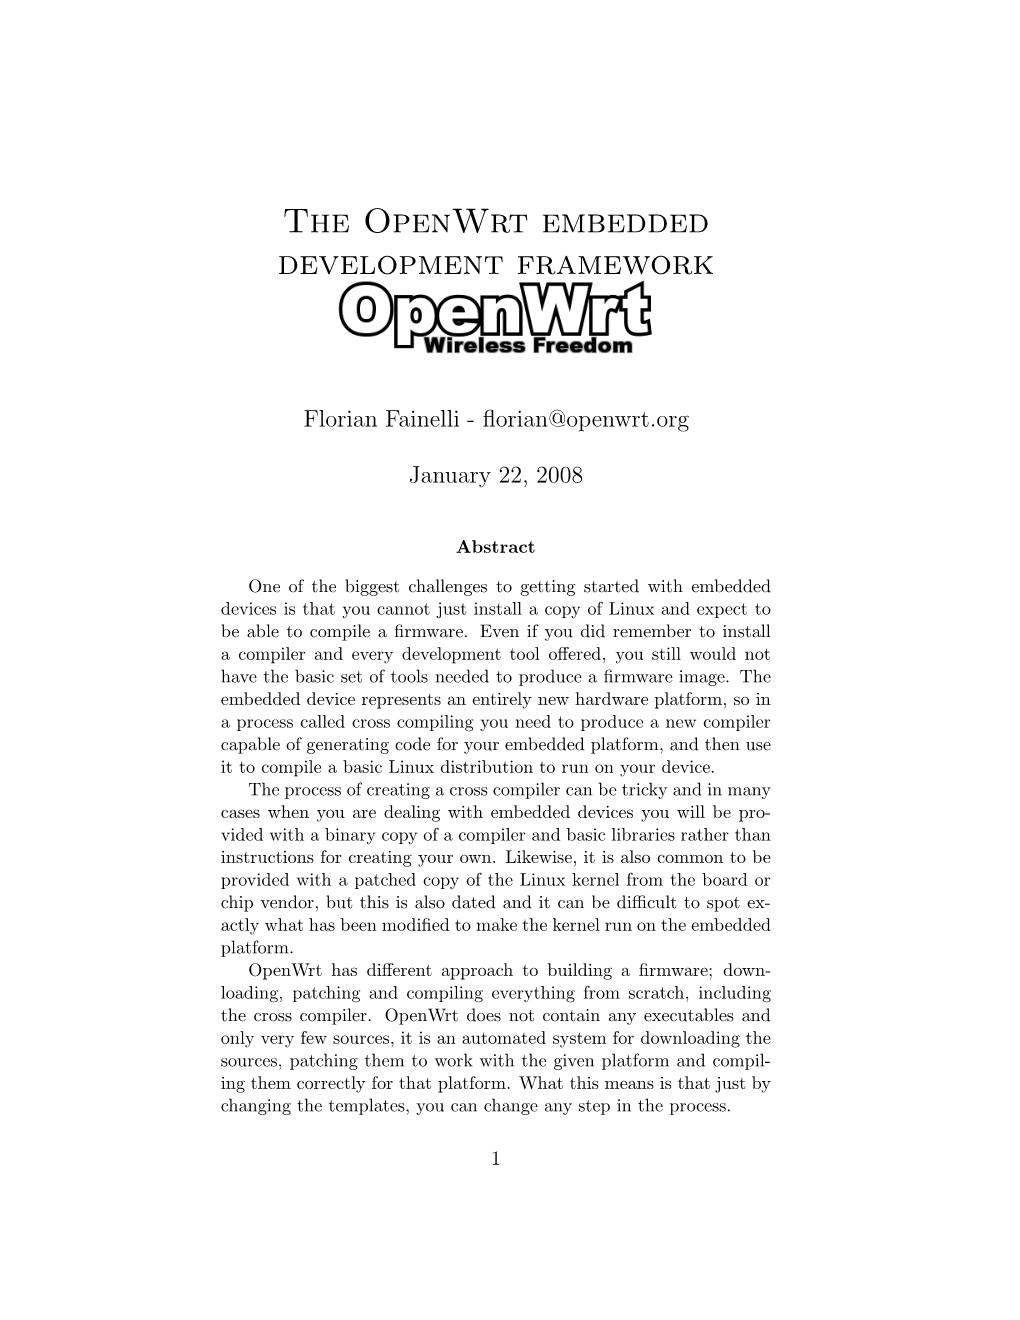 The Openwrt Embedded Development Framework